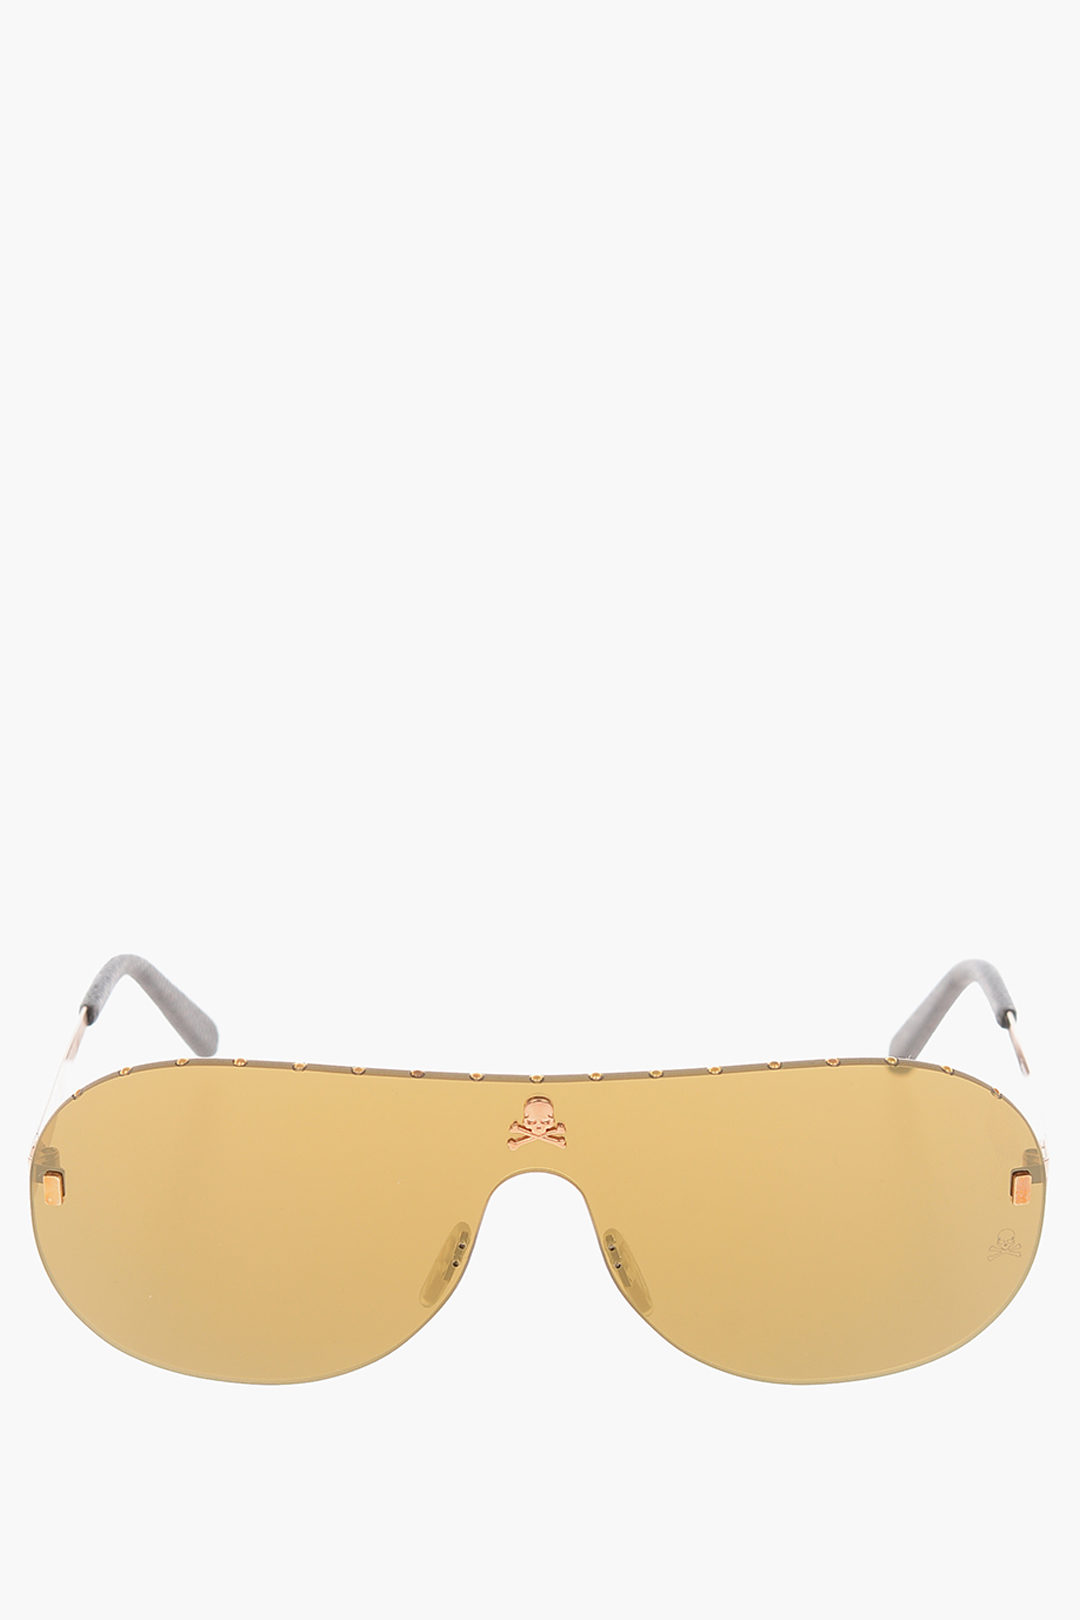 Buy Retro Steampunk Sunglasses Online - Fashionable & Stylish – SunRay  Glasses